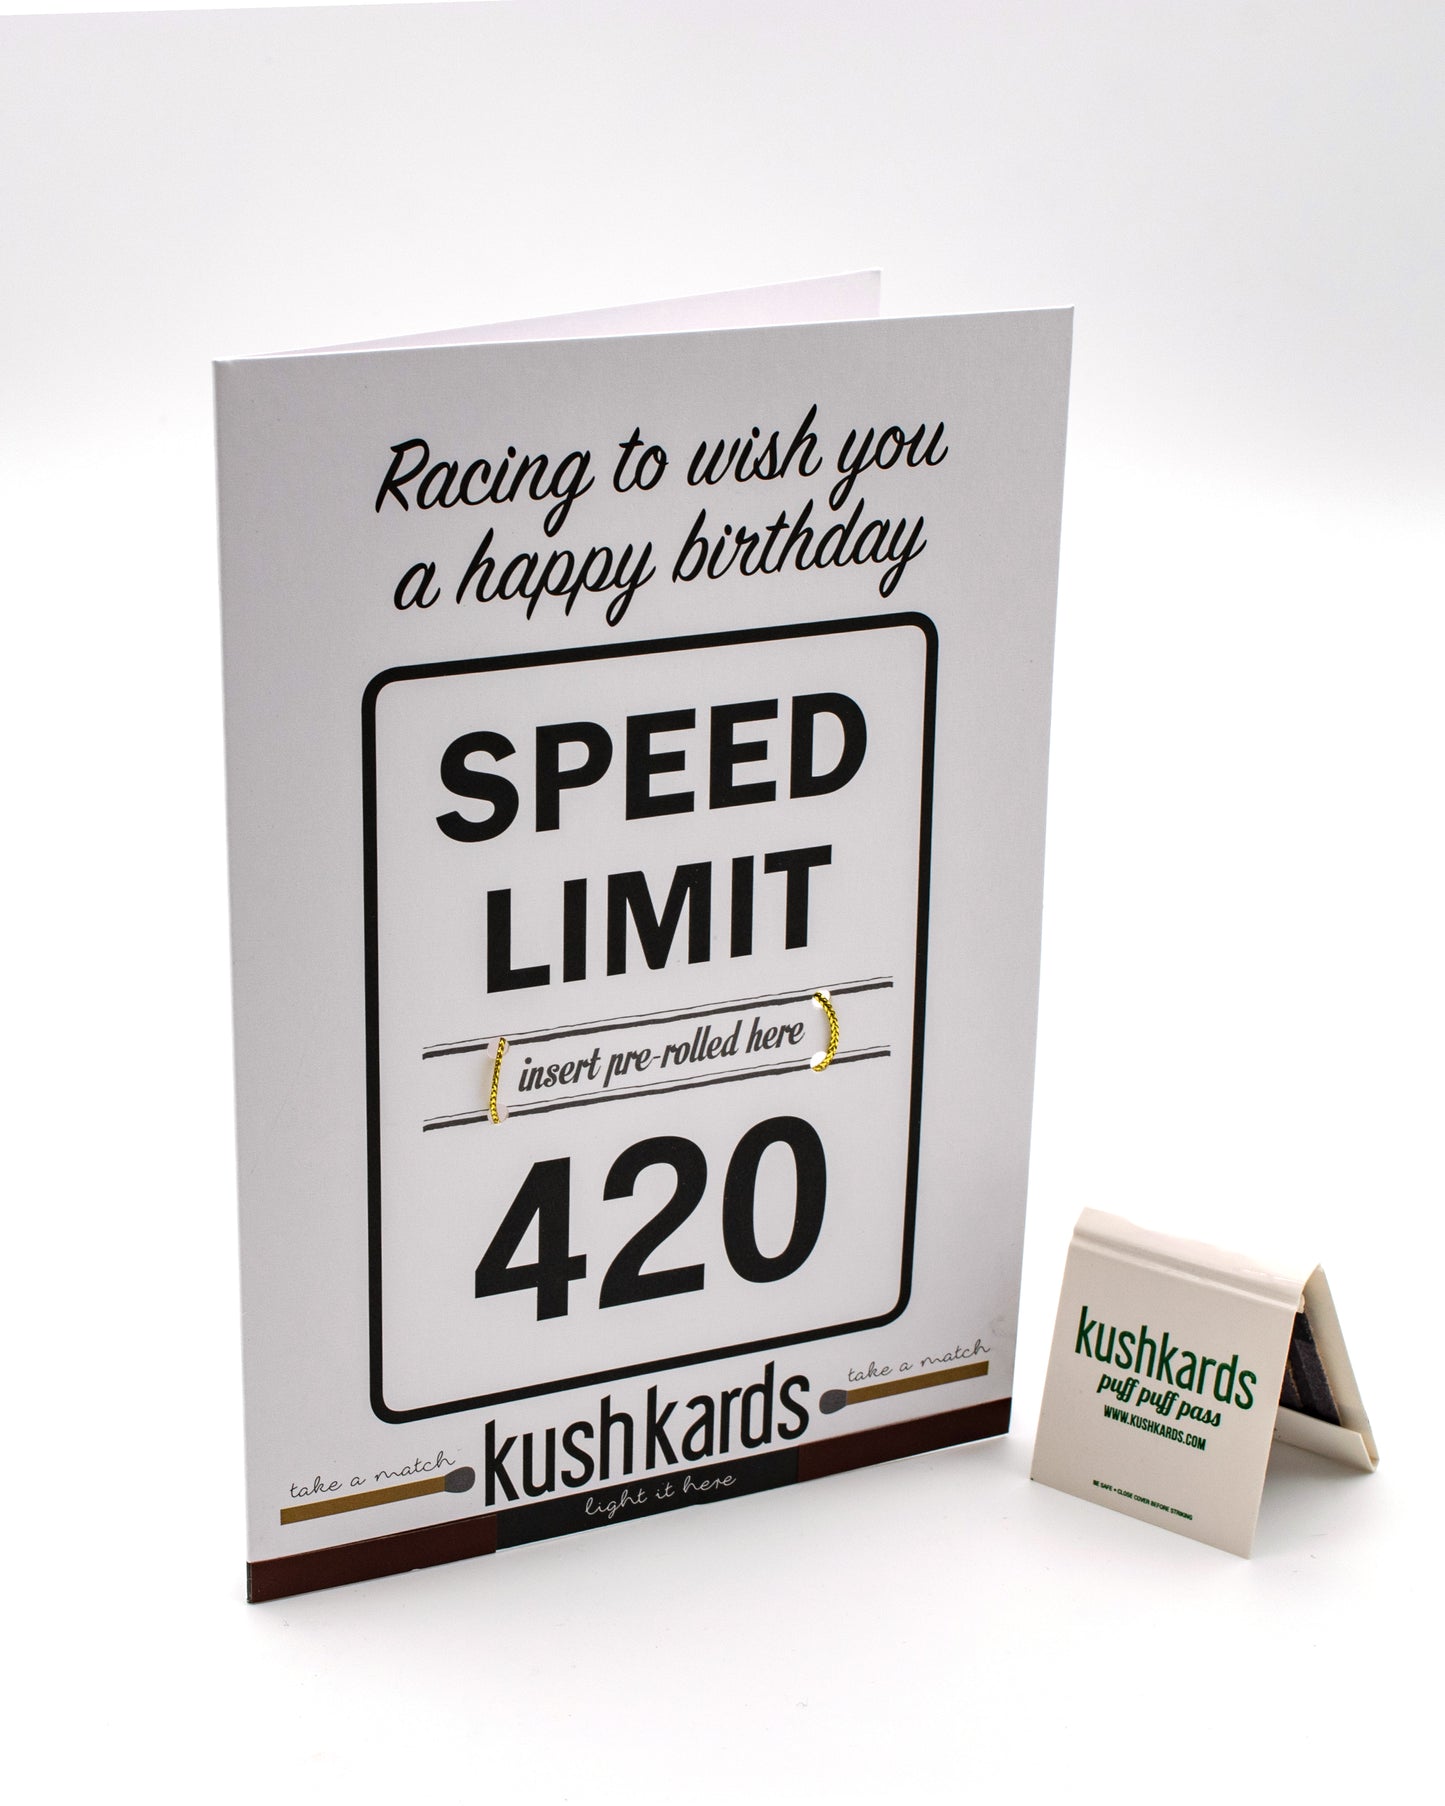 Kush Kards Hilarious High-minded Greeting Cards